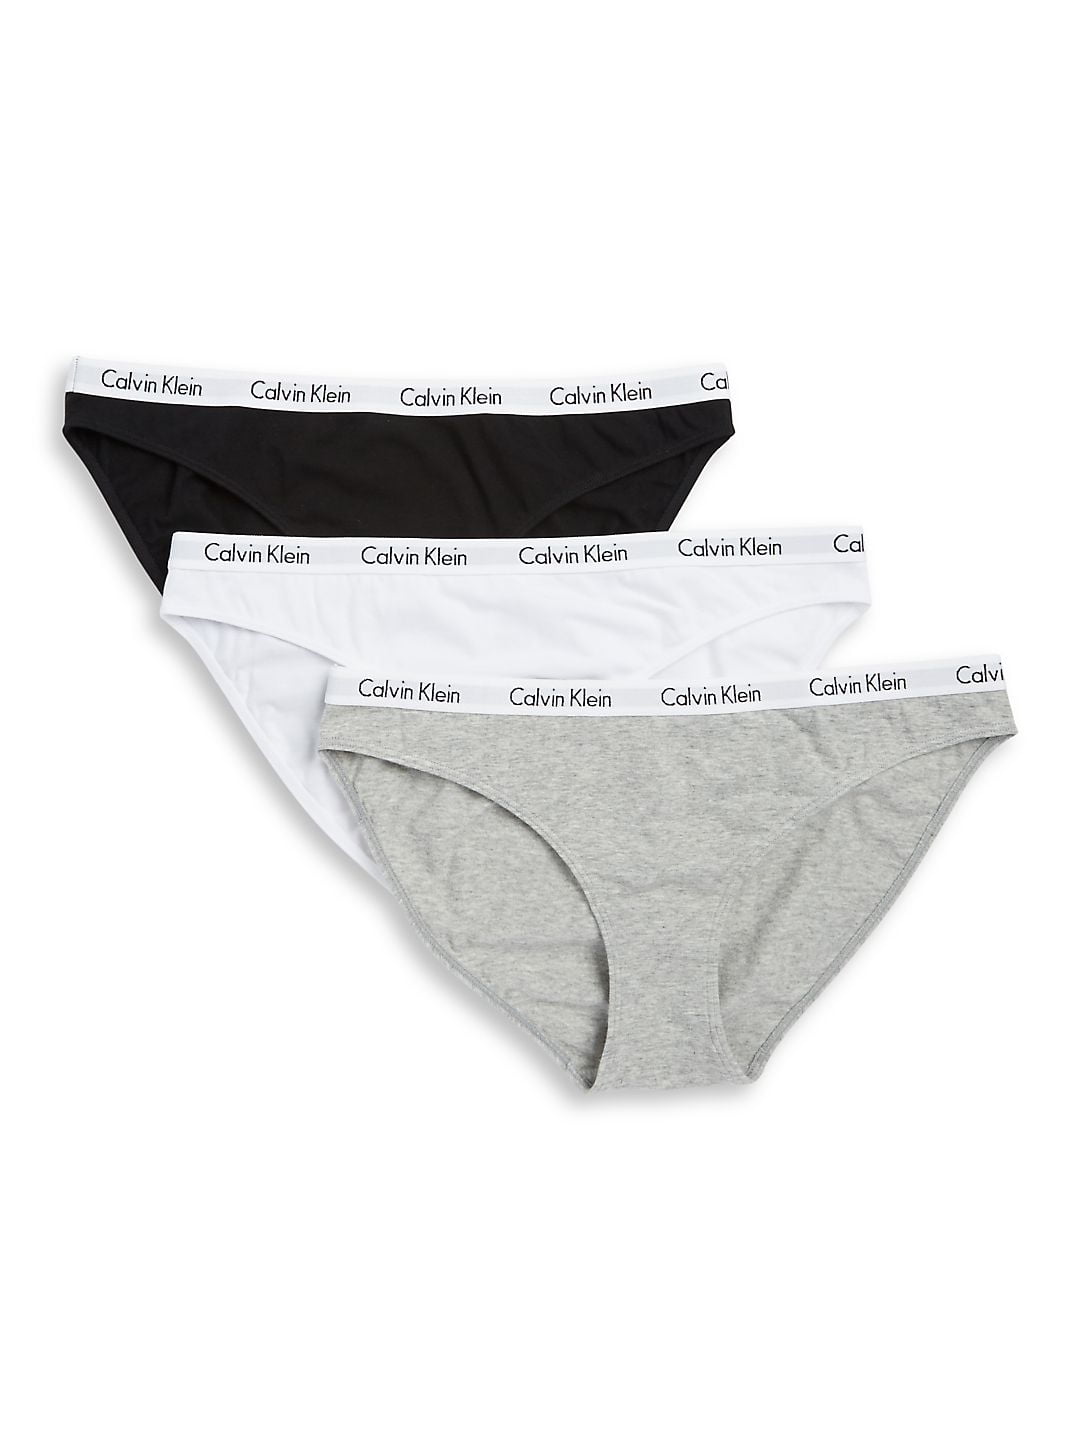 Anne Klein Spandex Panties for Women